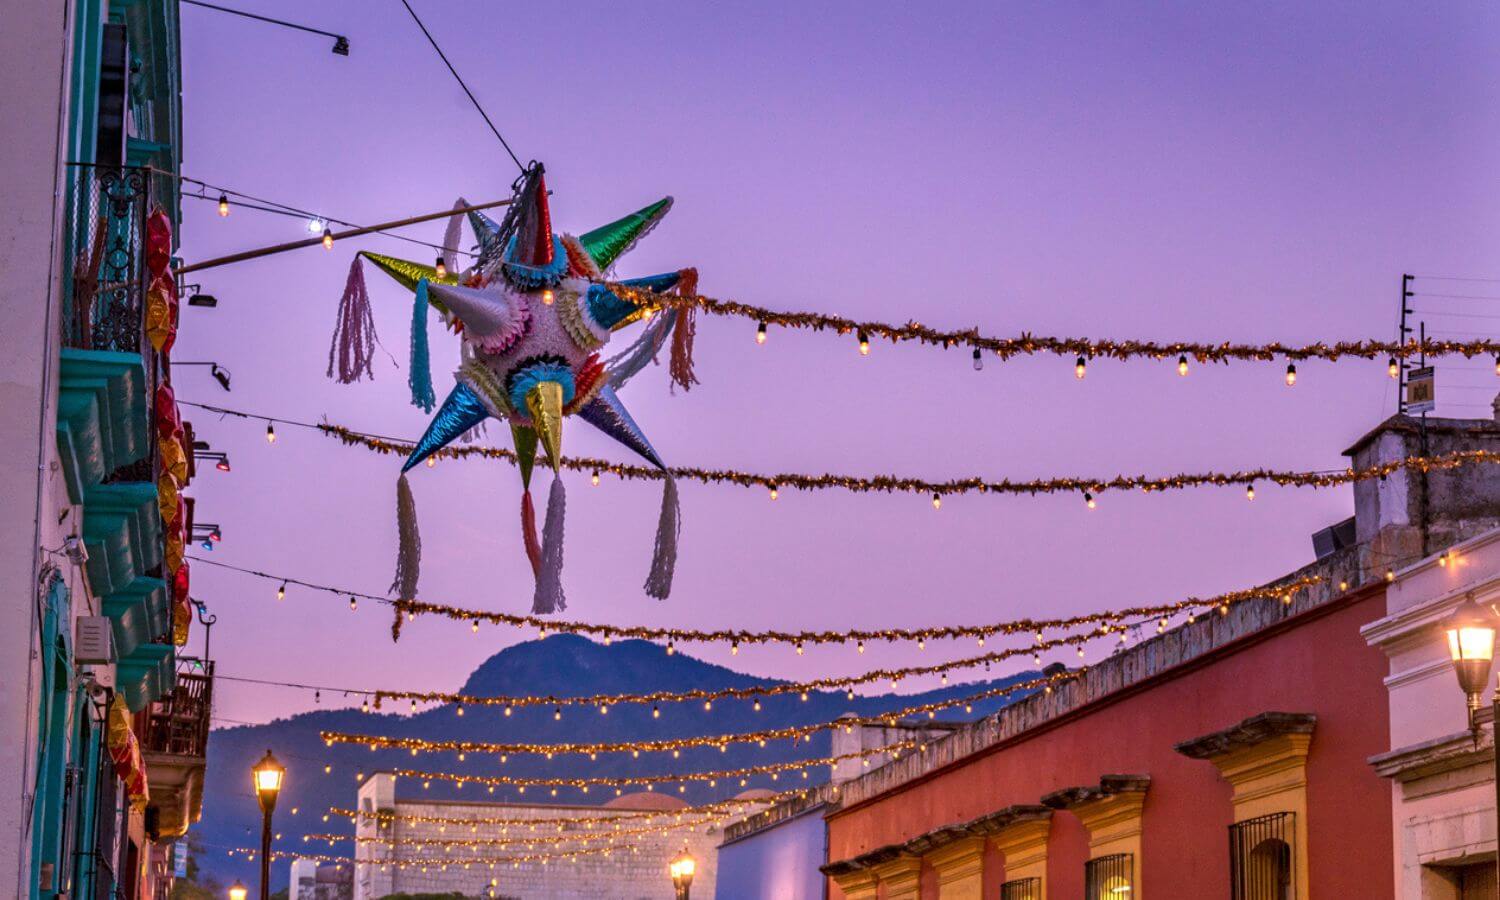 Christmas Decorations in a street in Oaxaca